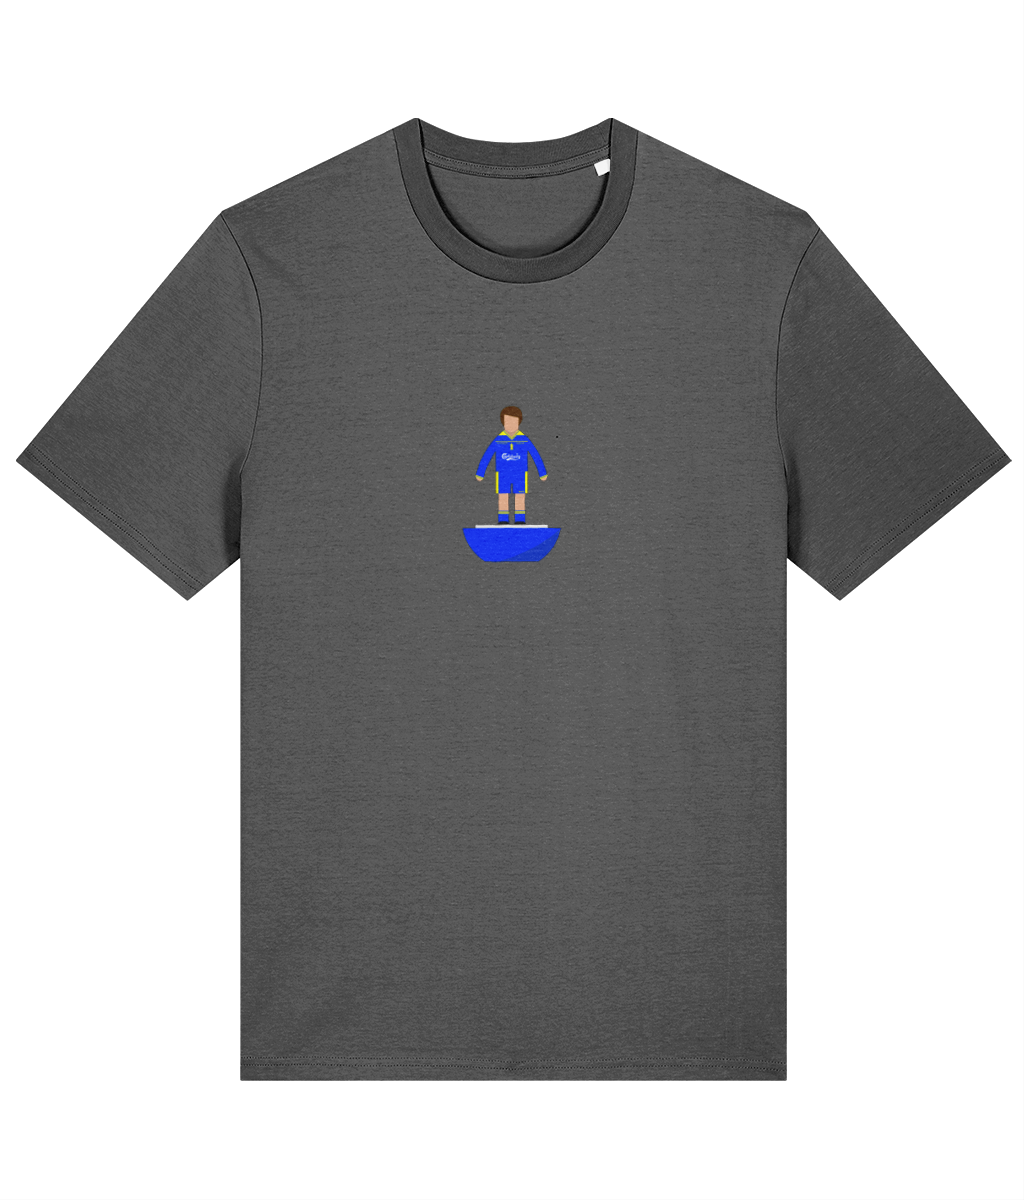 Football Kits 'Wimbledon 1988' Unisex T-Shirt